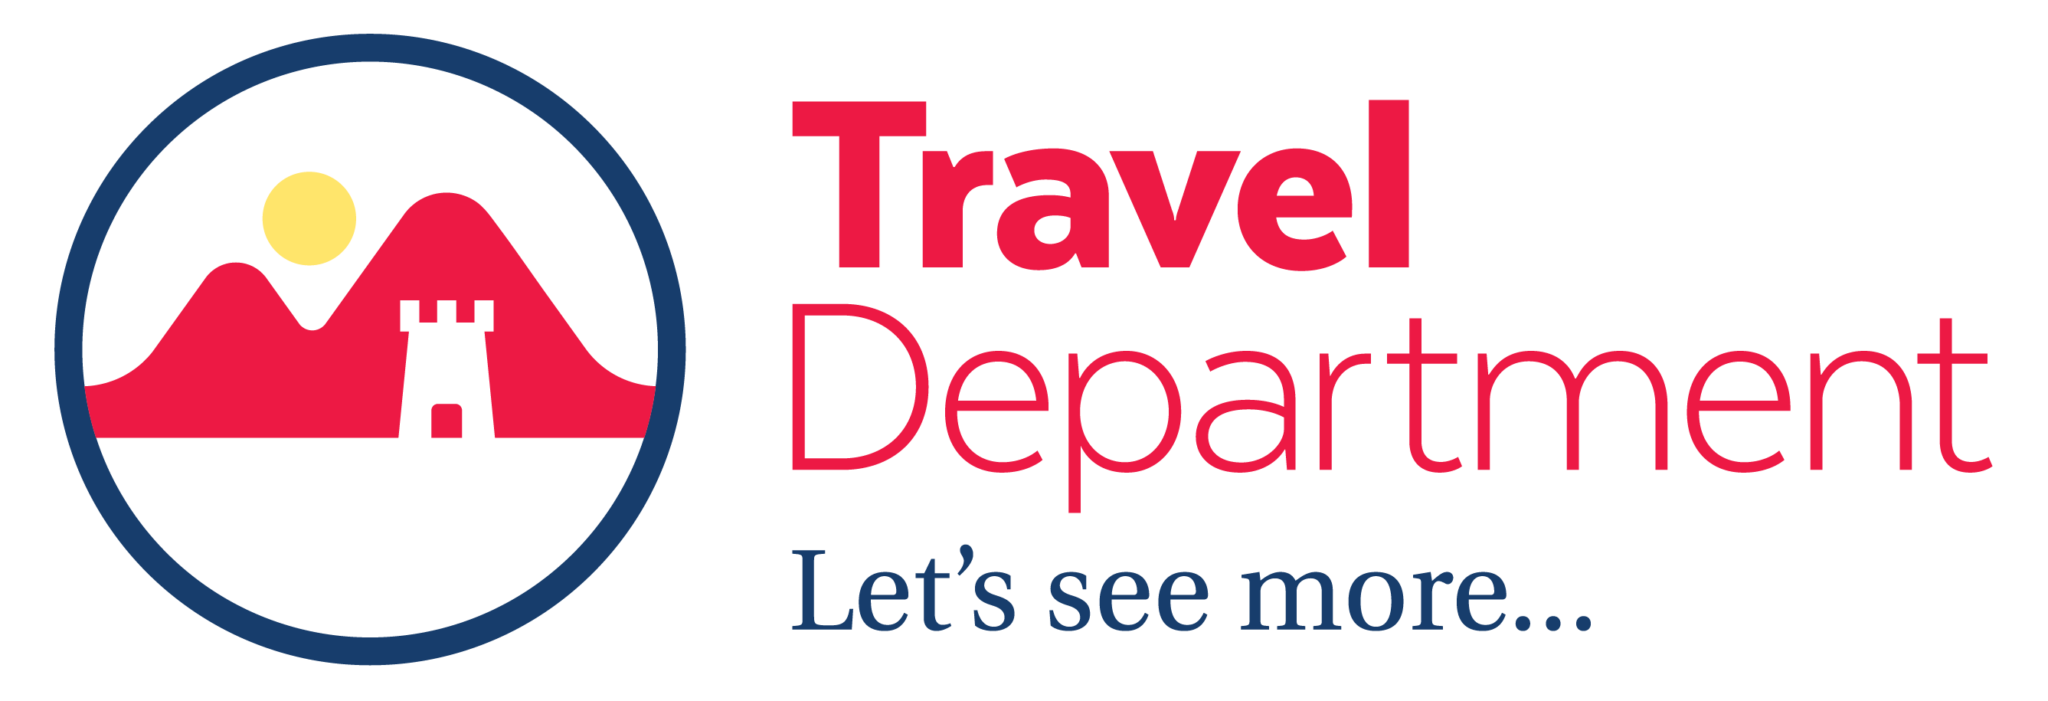 travel department dublin